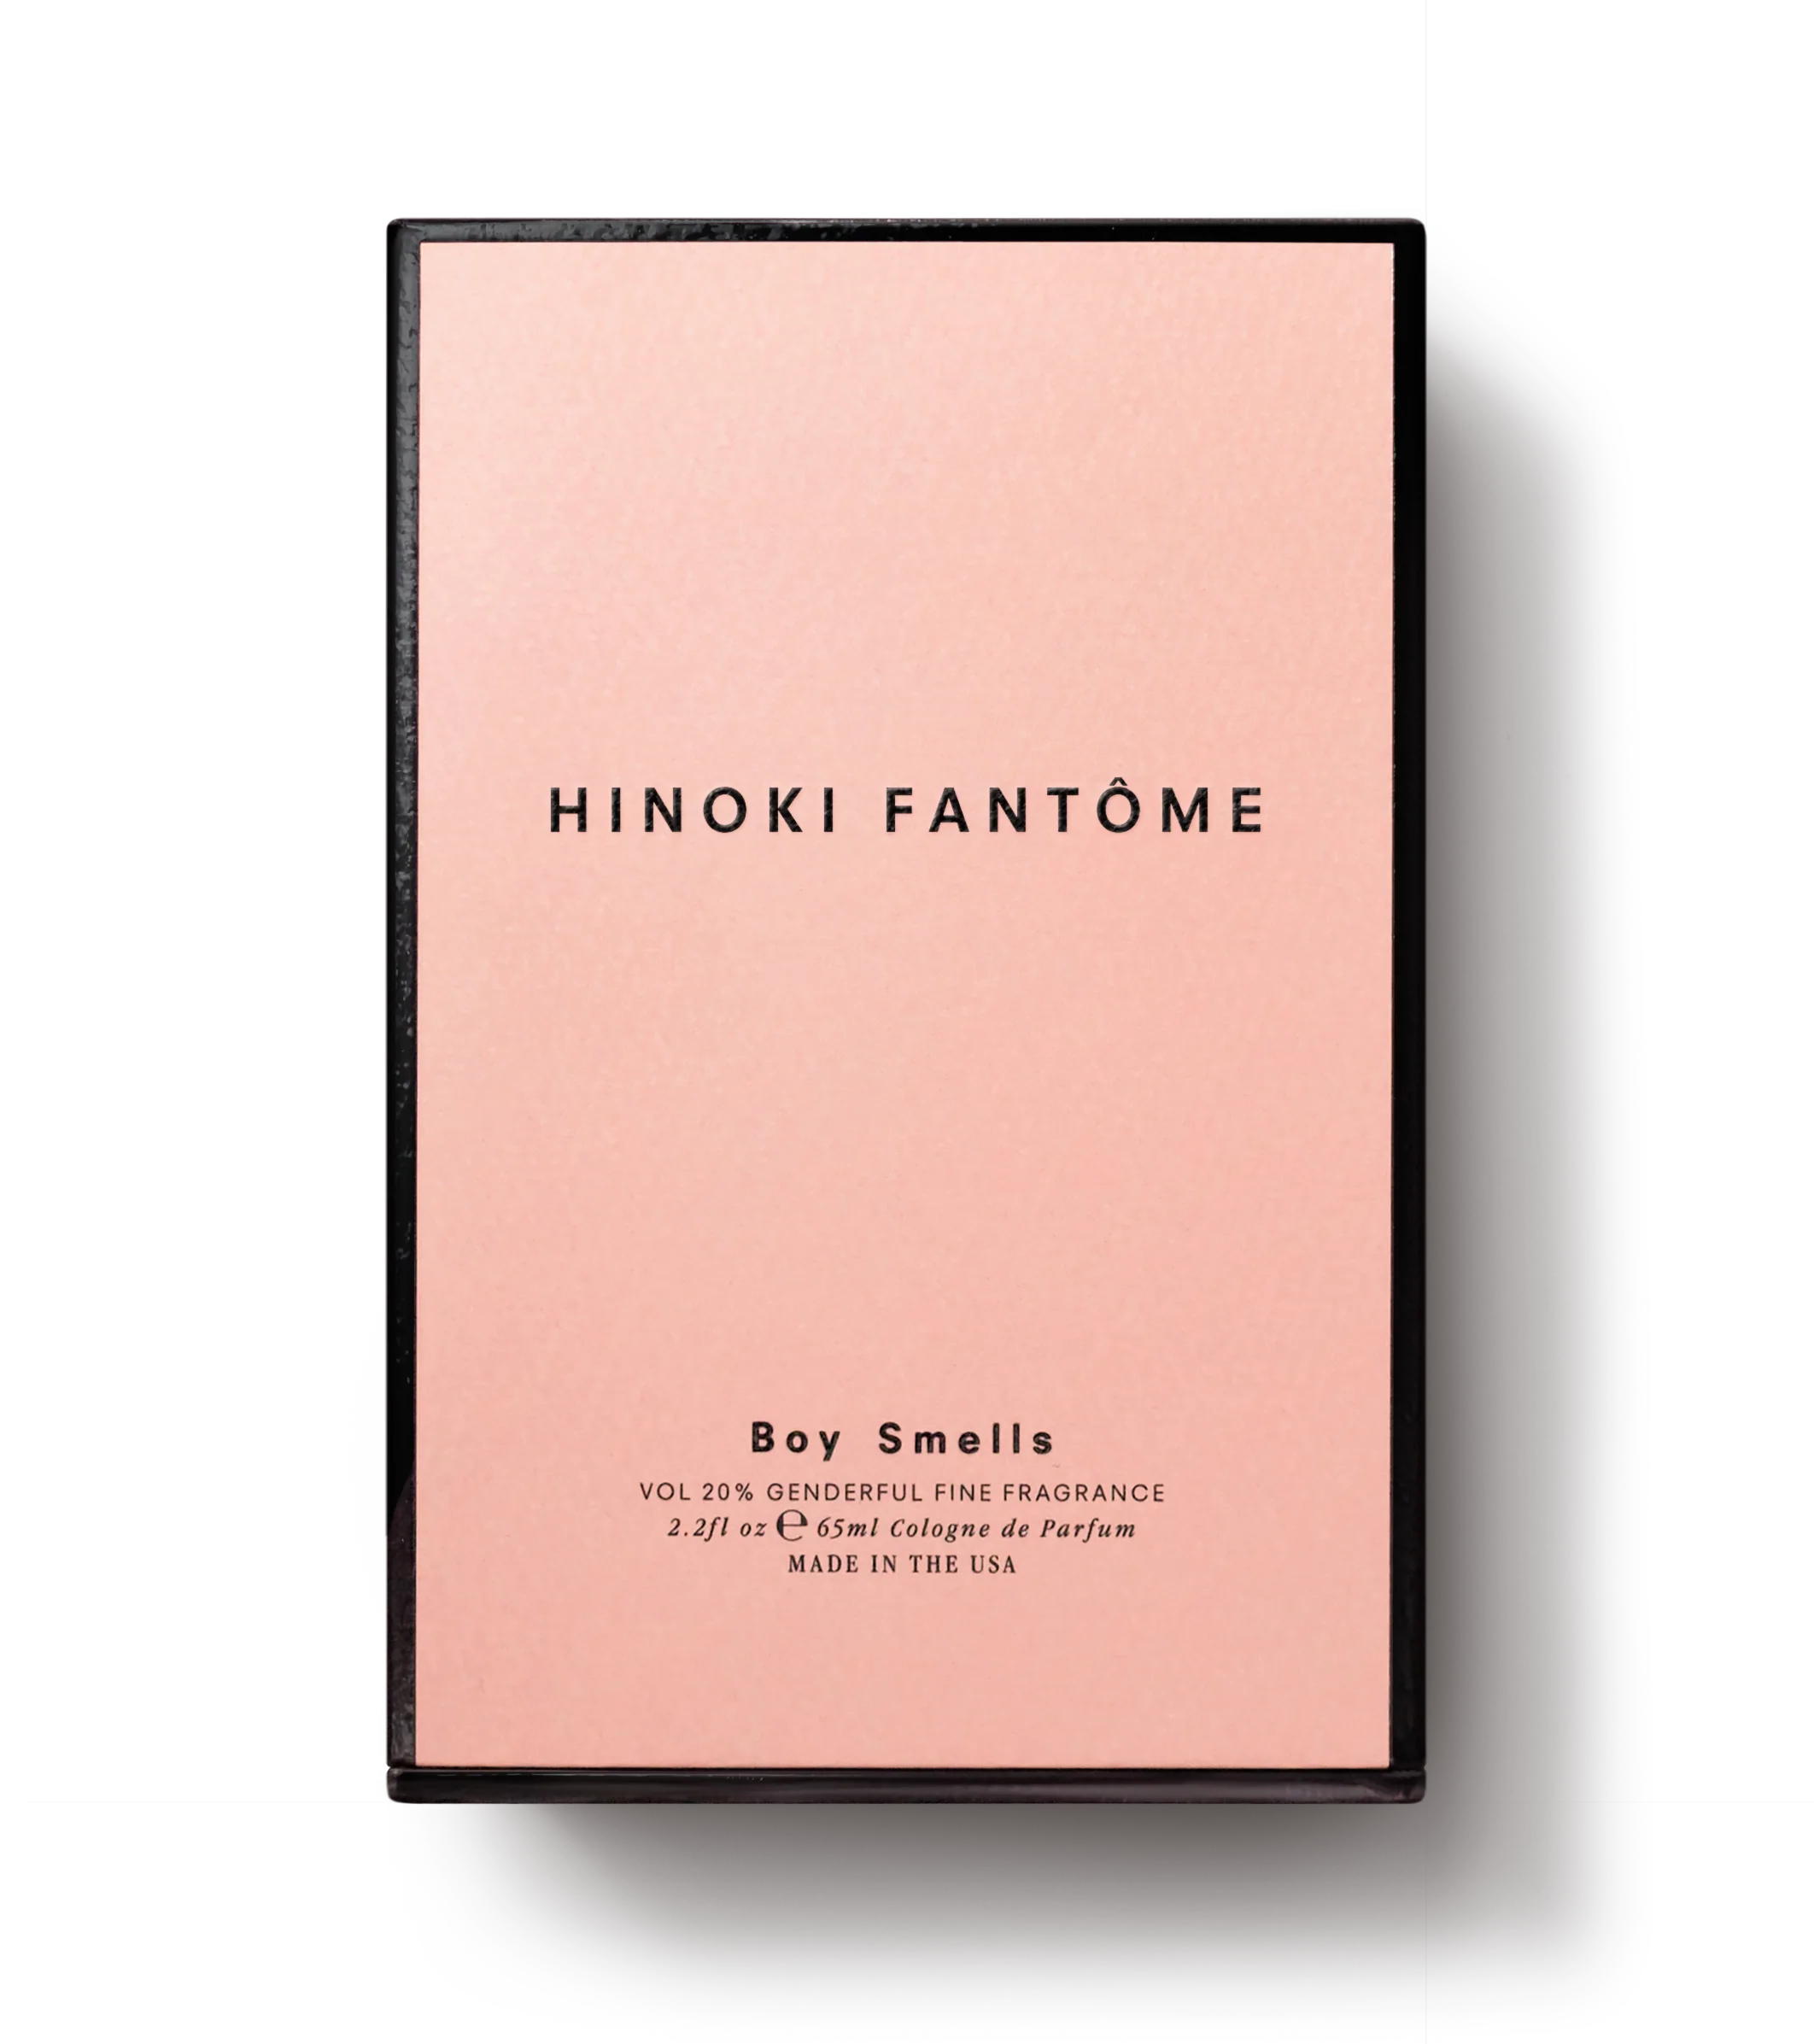 Boys Smells Hinoki Fantome - Eau de Parfum